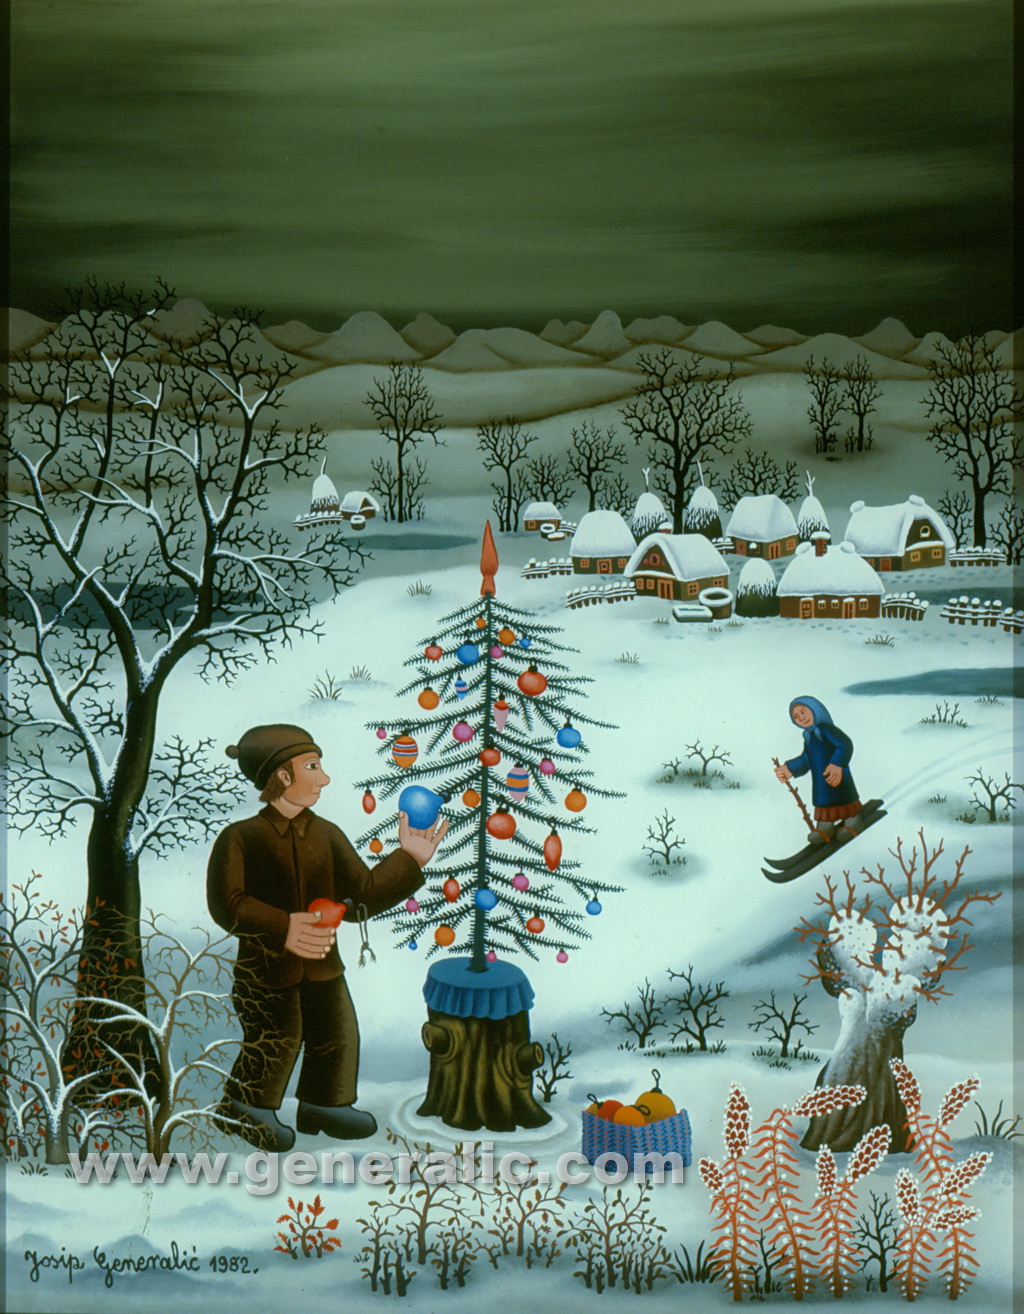 Josip Generalic, 1982, Christmas tree, oil on glass, 64x49 cm